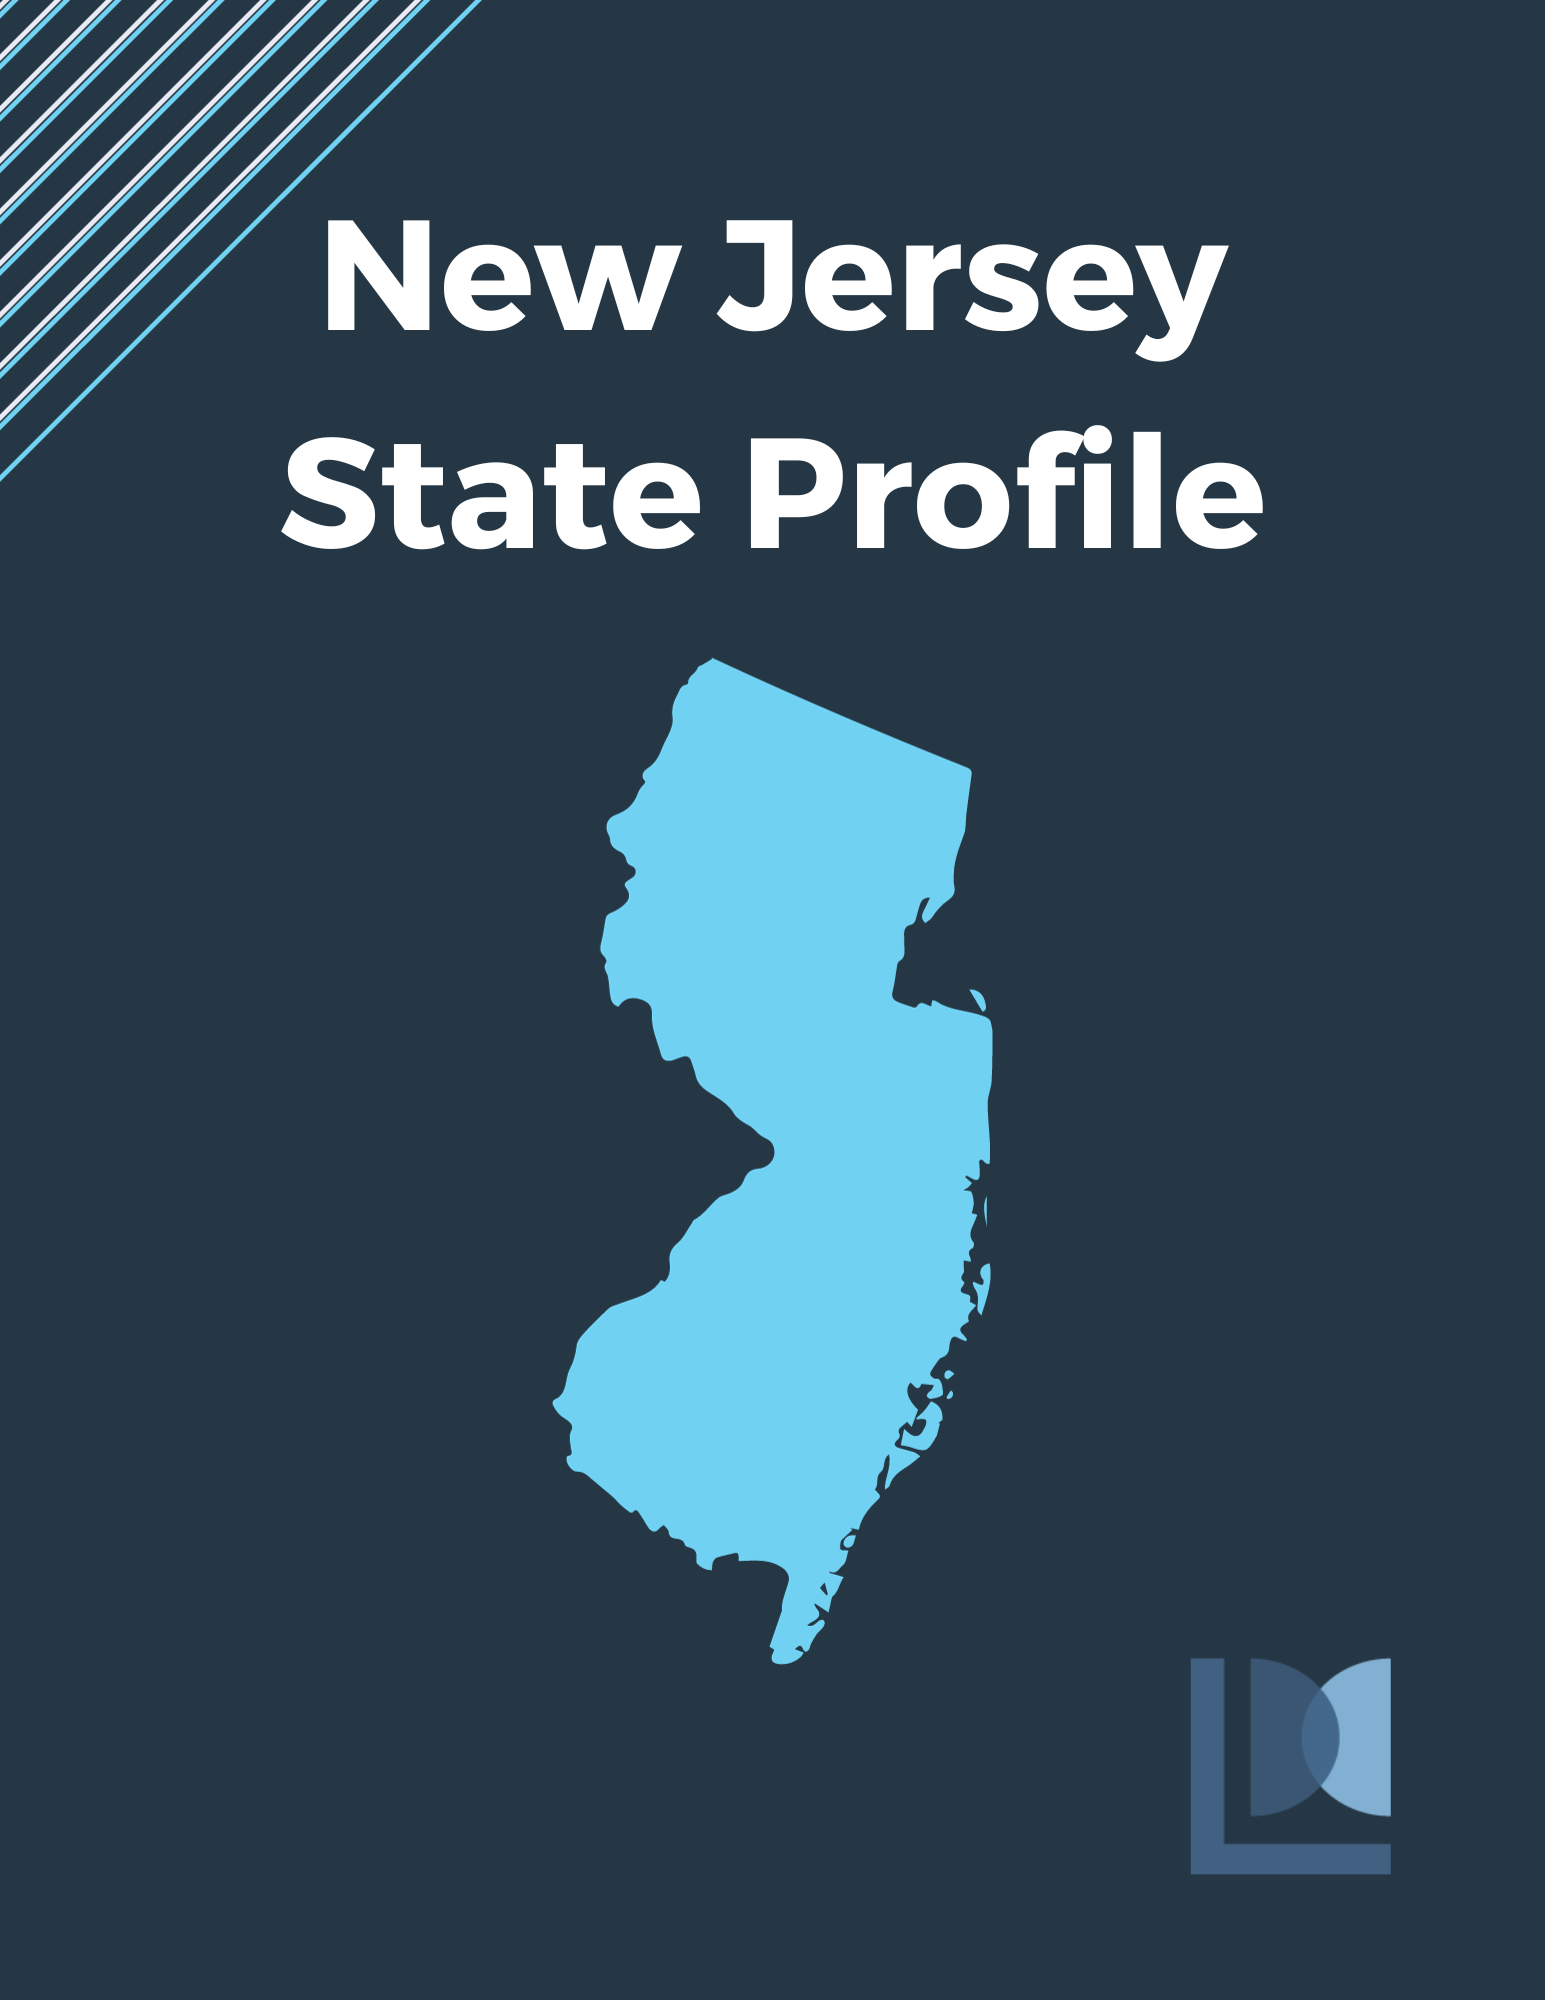 New Jersey State Profile (Copy)